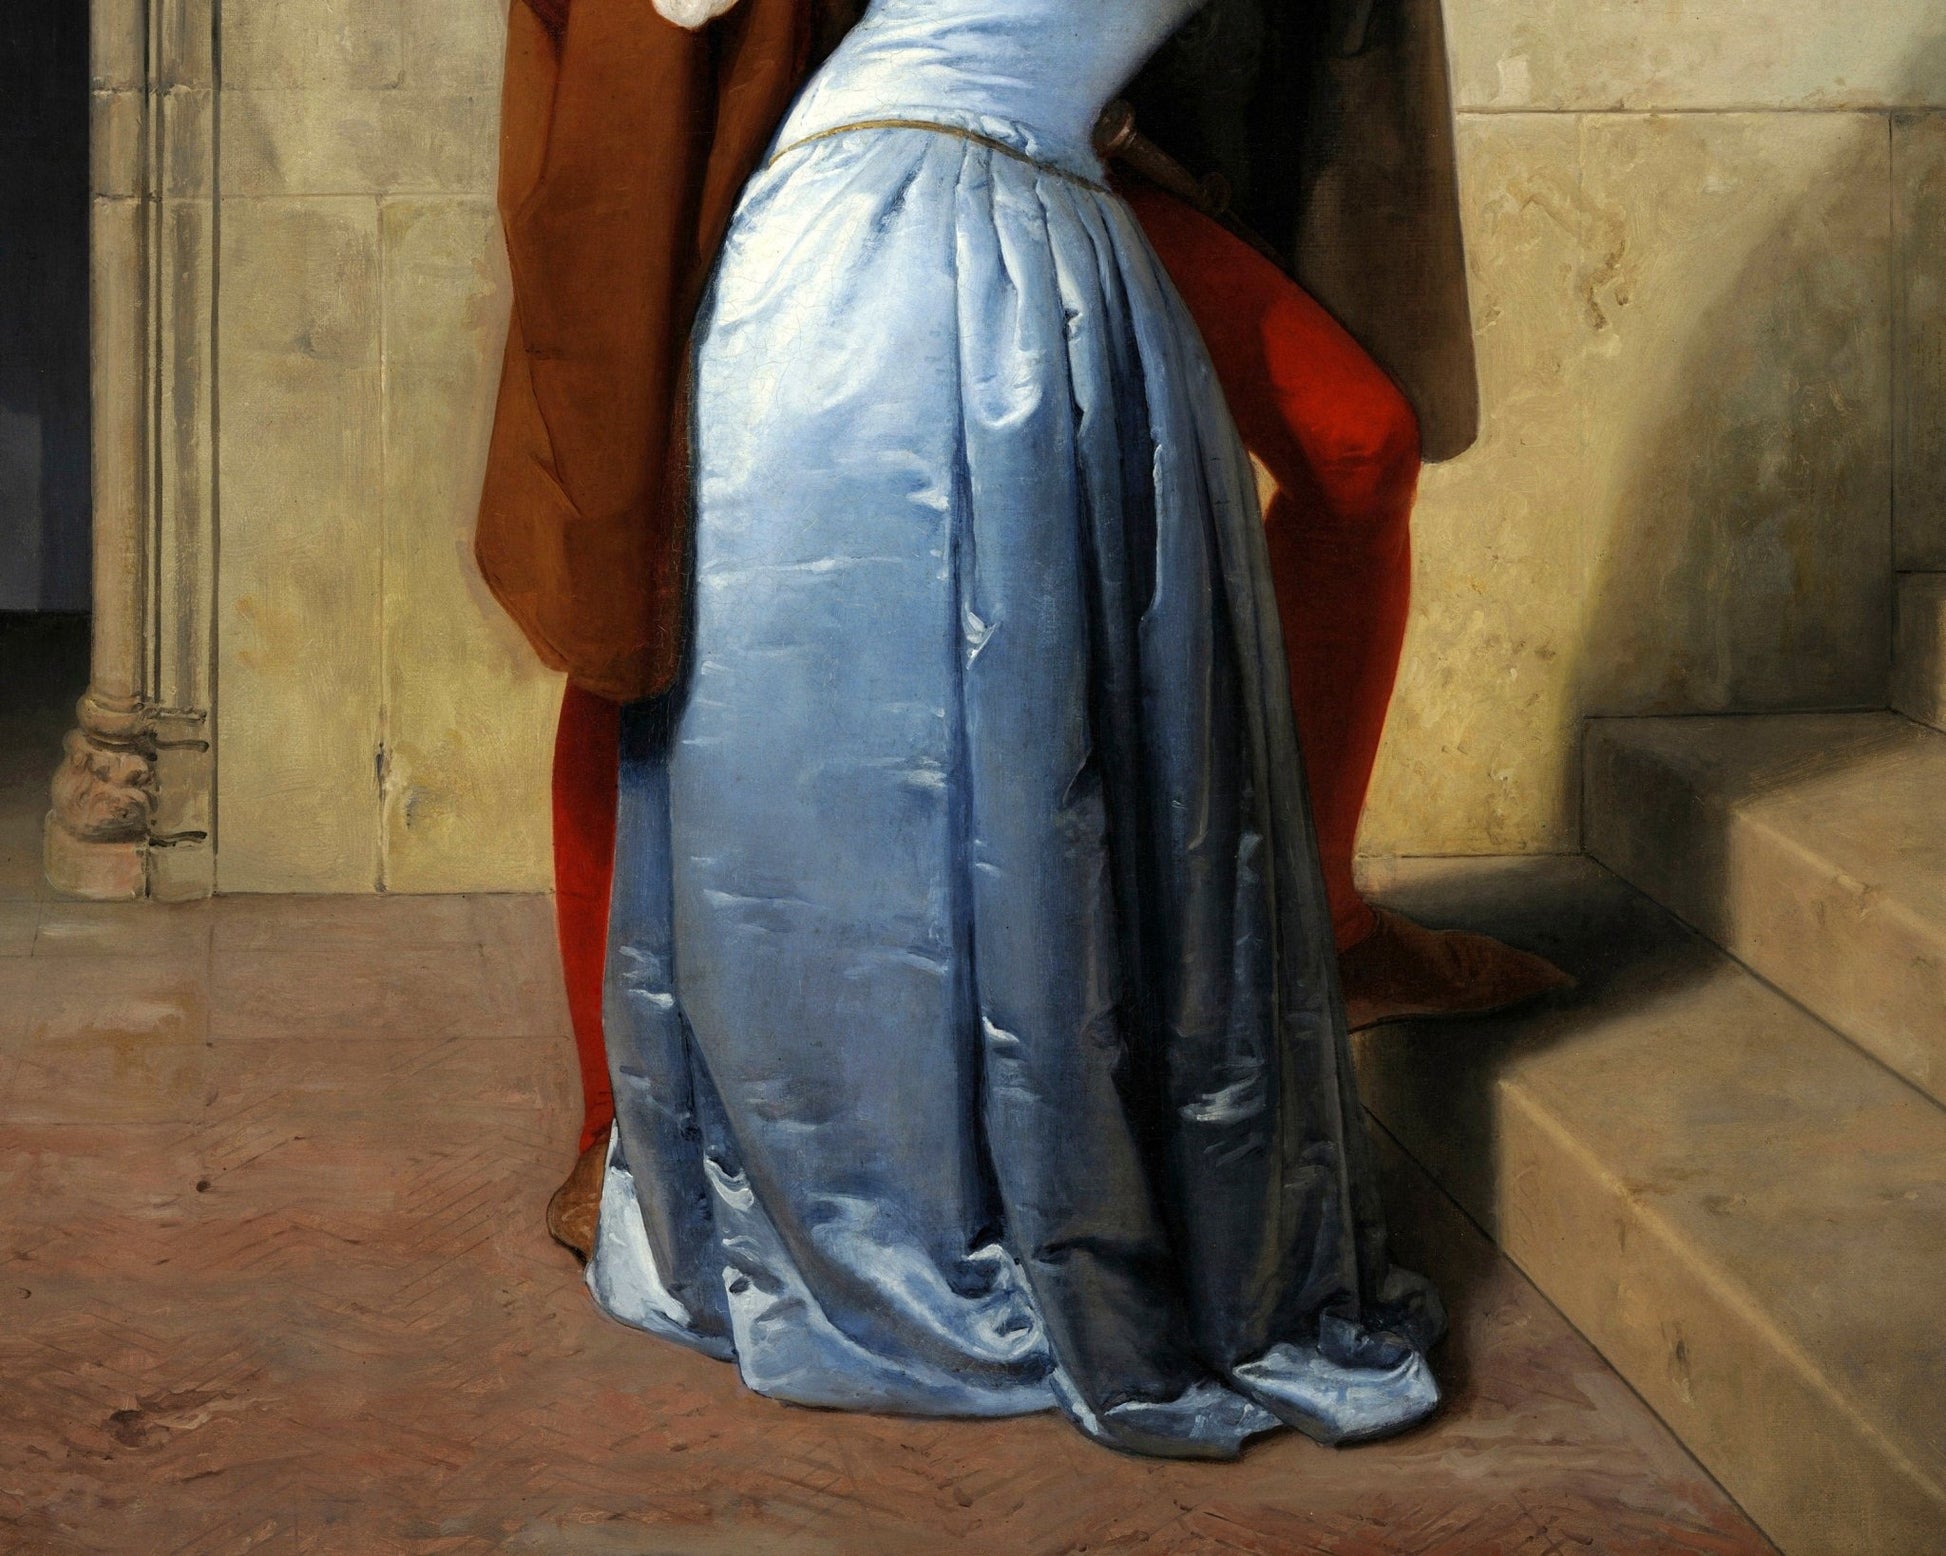 Fransesco Hayez "Il Bacio /The Kiss" (1859) - Mabon Gallery